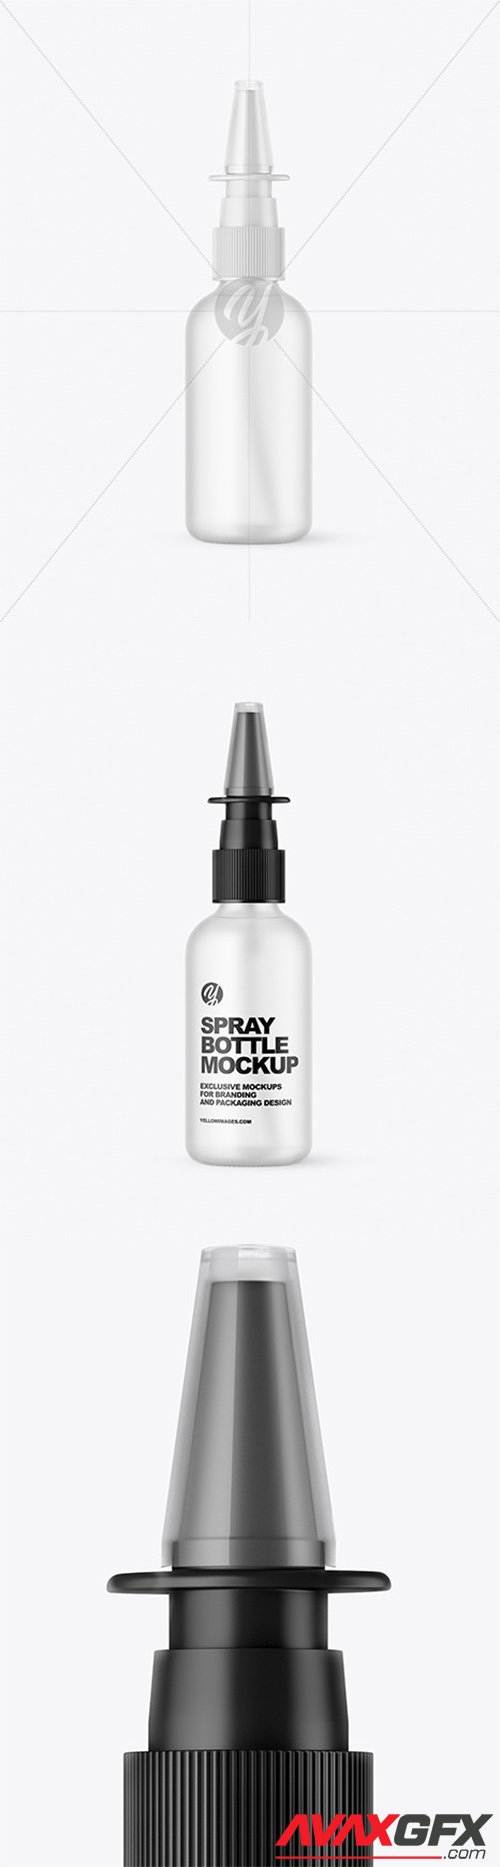 Frosted Glass Nasal Spray Bottle Mockup 66528